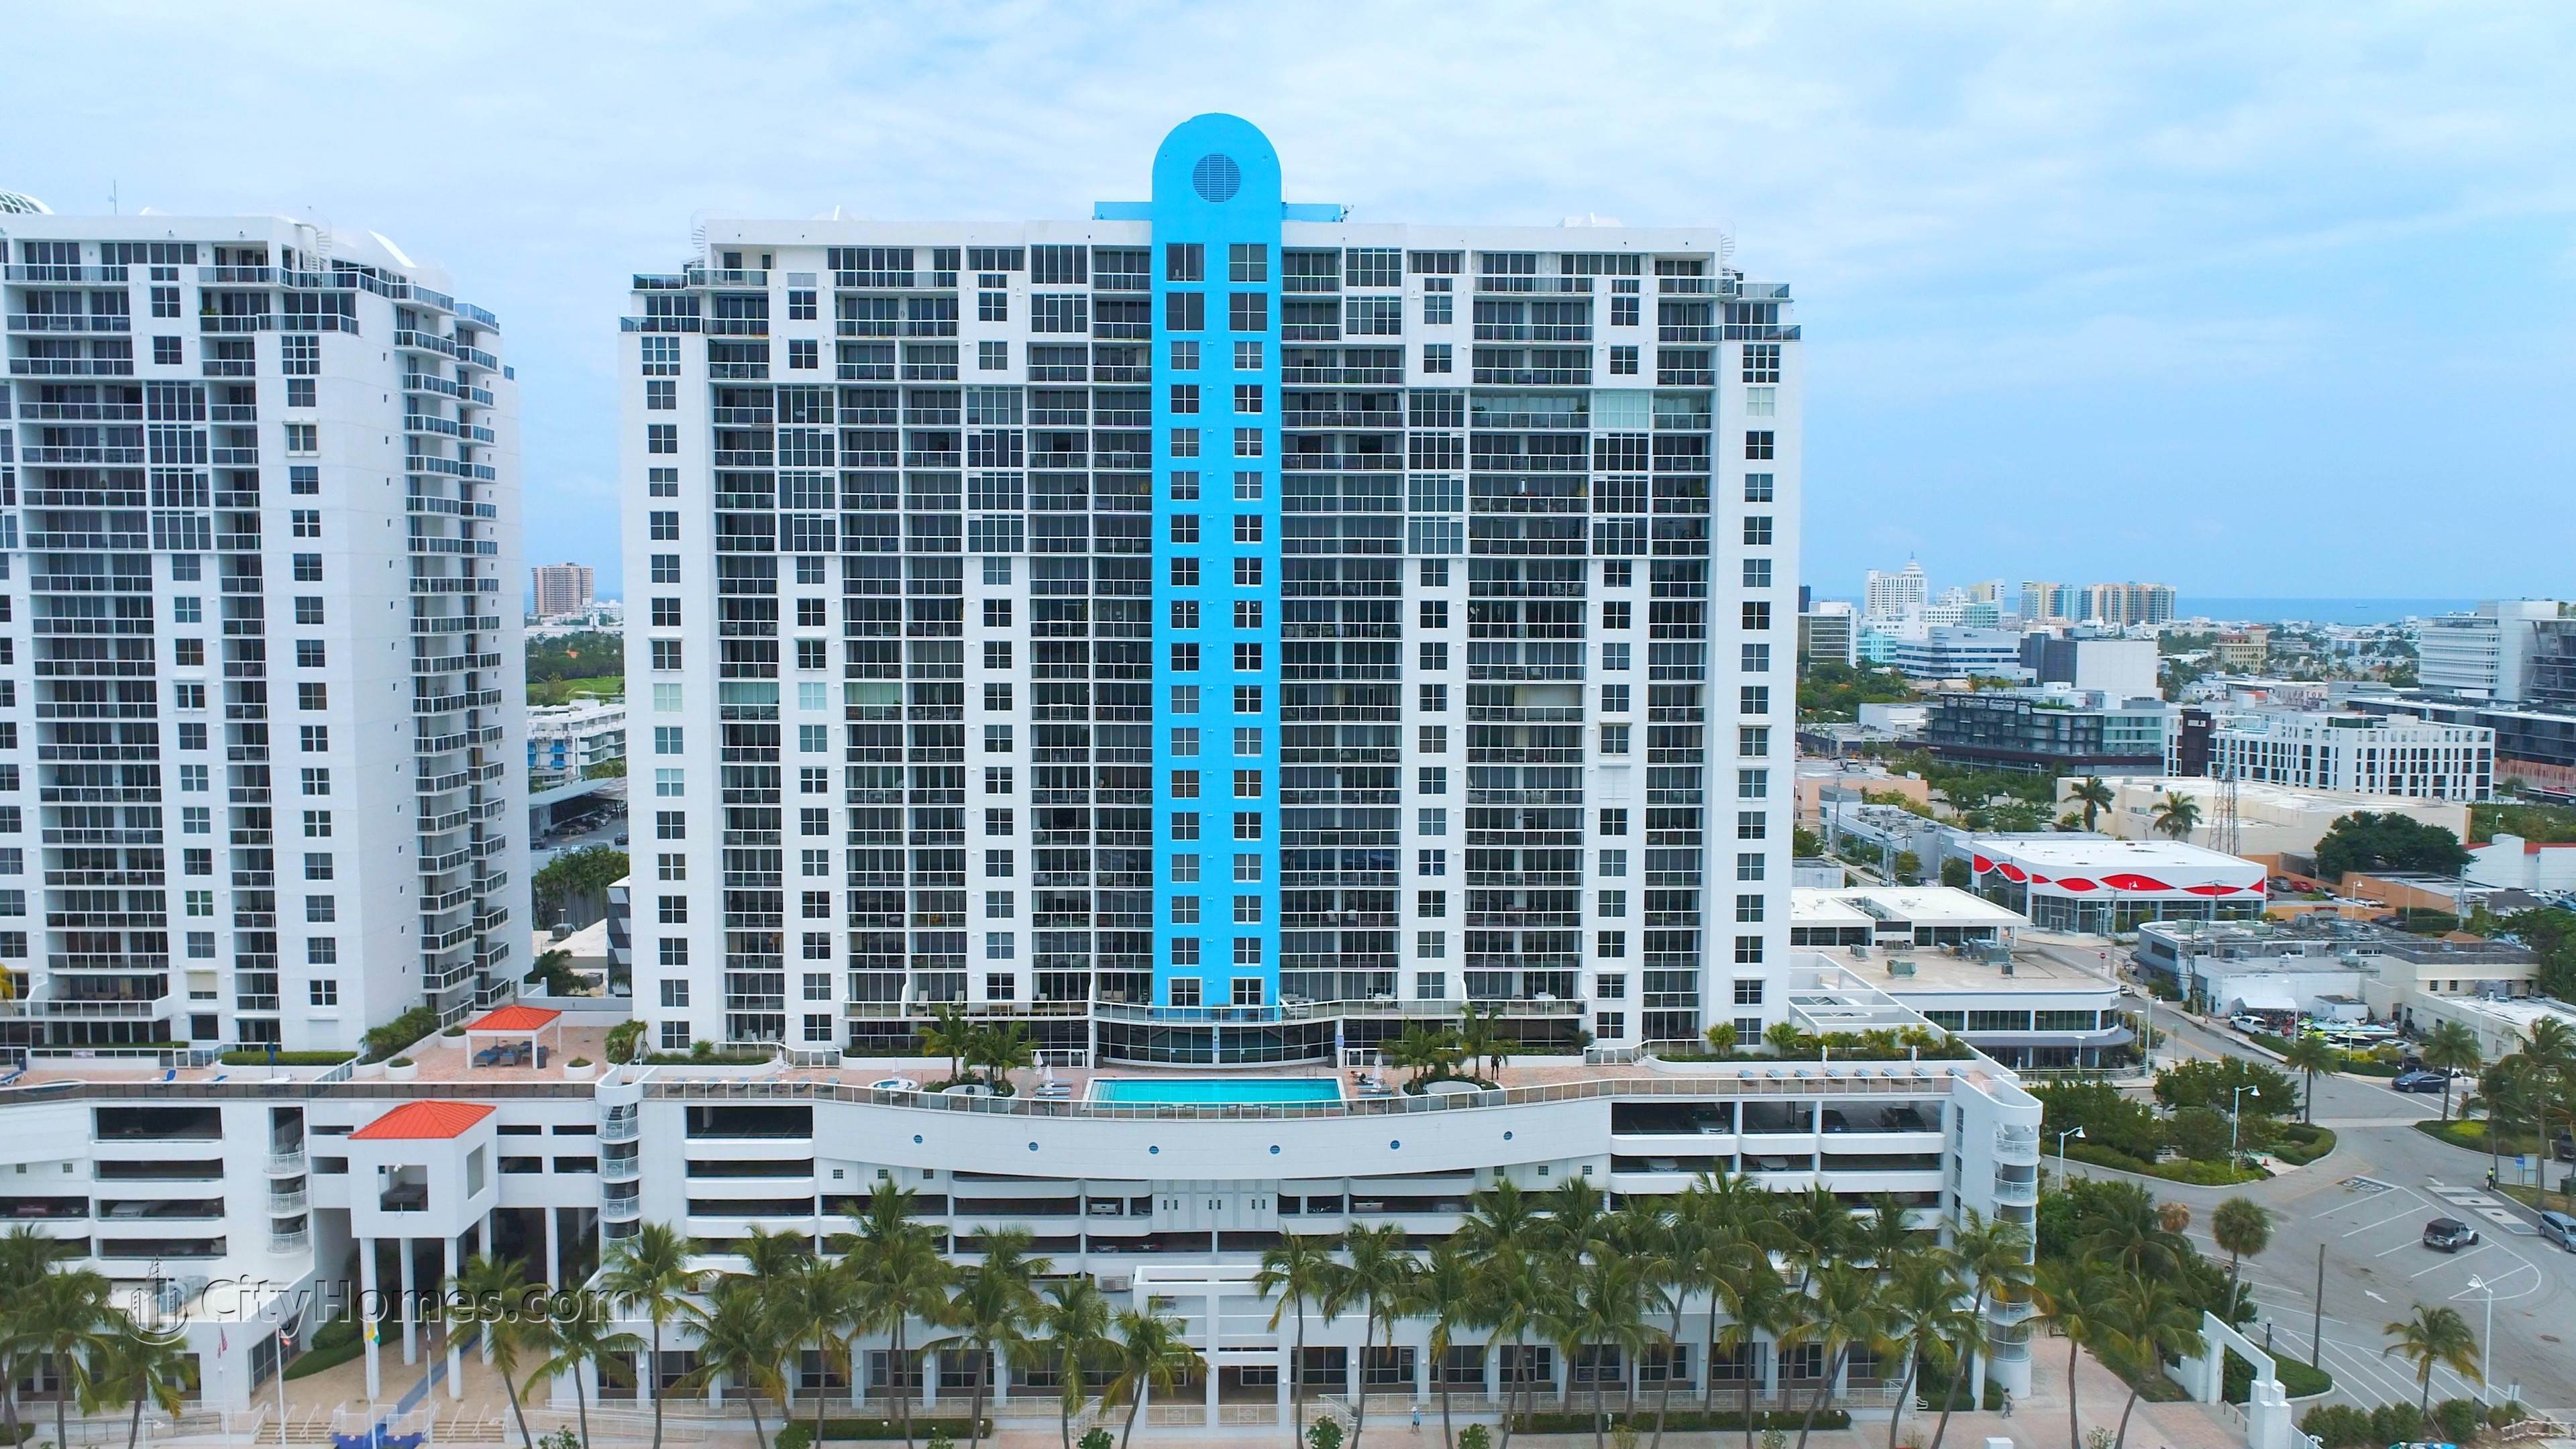 SUNSET HARBOUR SOUTH edificio en 1800 Sunset Harbour Drive, Mid Beach, Miami Beach, FL 33139